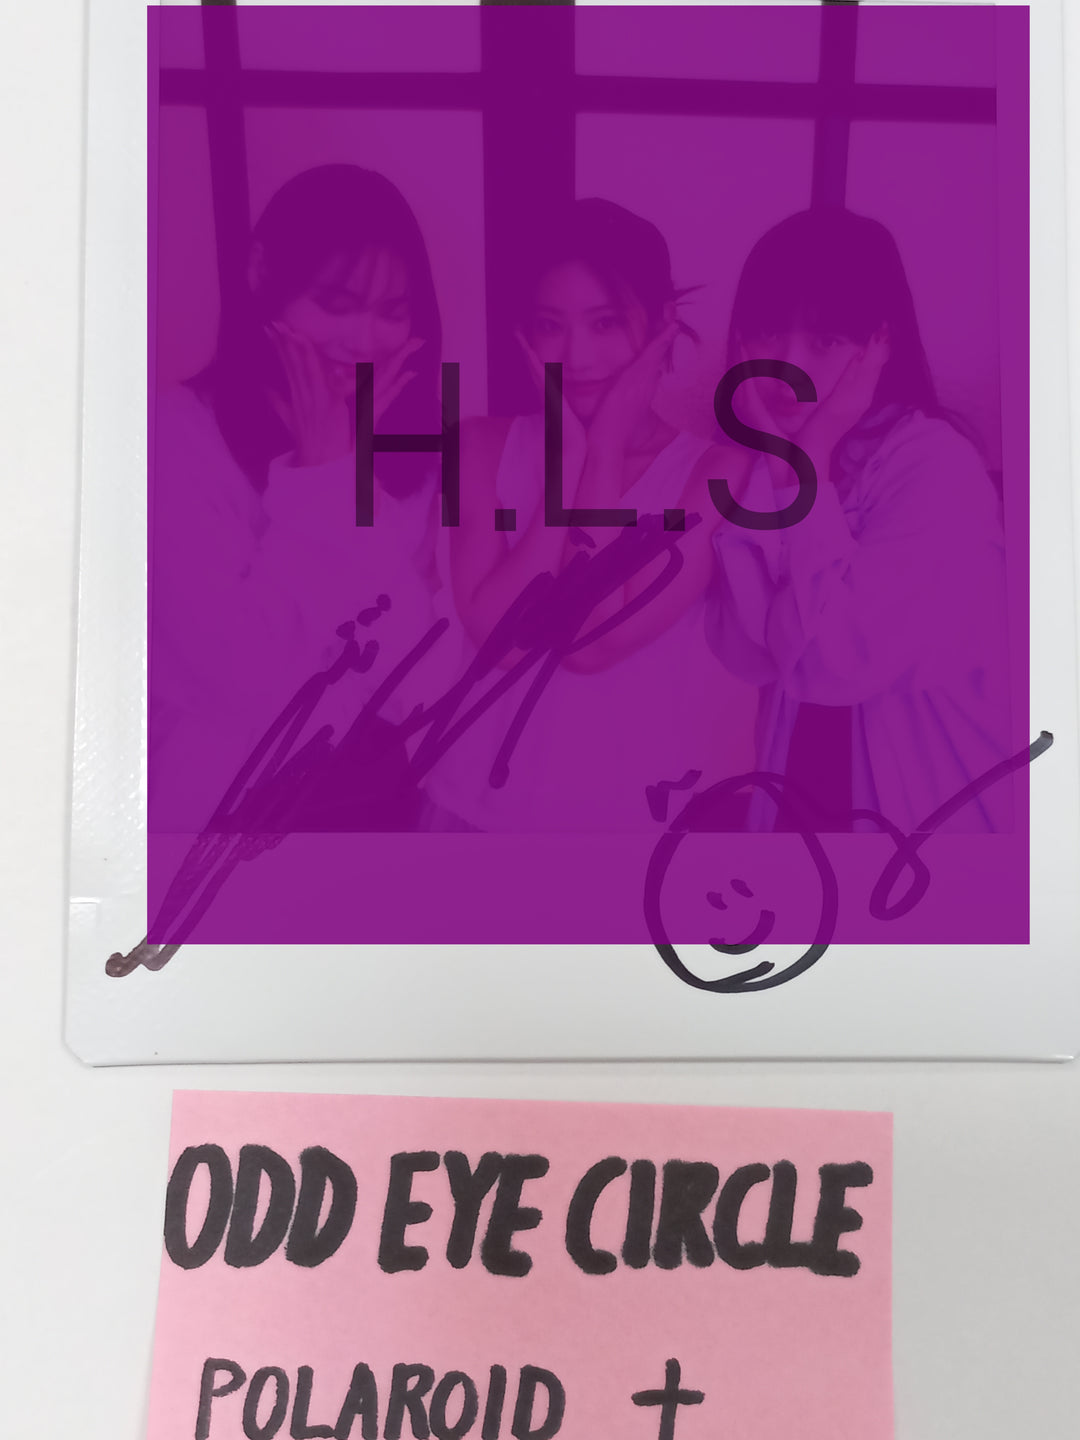 ODD EYE CIRCLE "Version Up"- Hand Autographed(Signed) Polaroid + Print Photo [23.09.25]